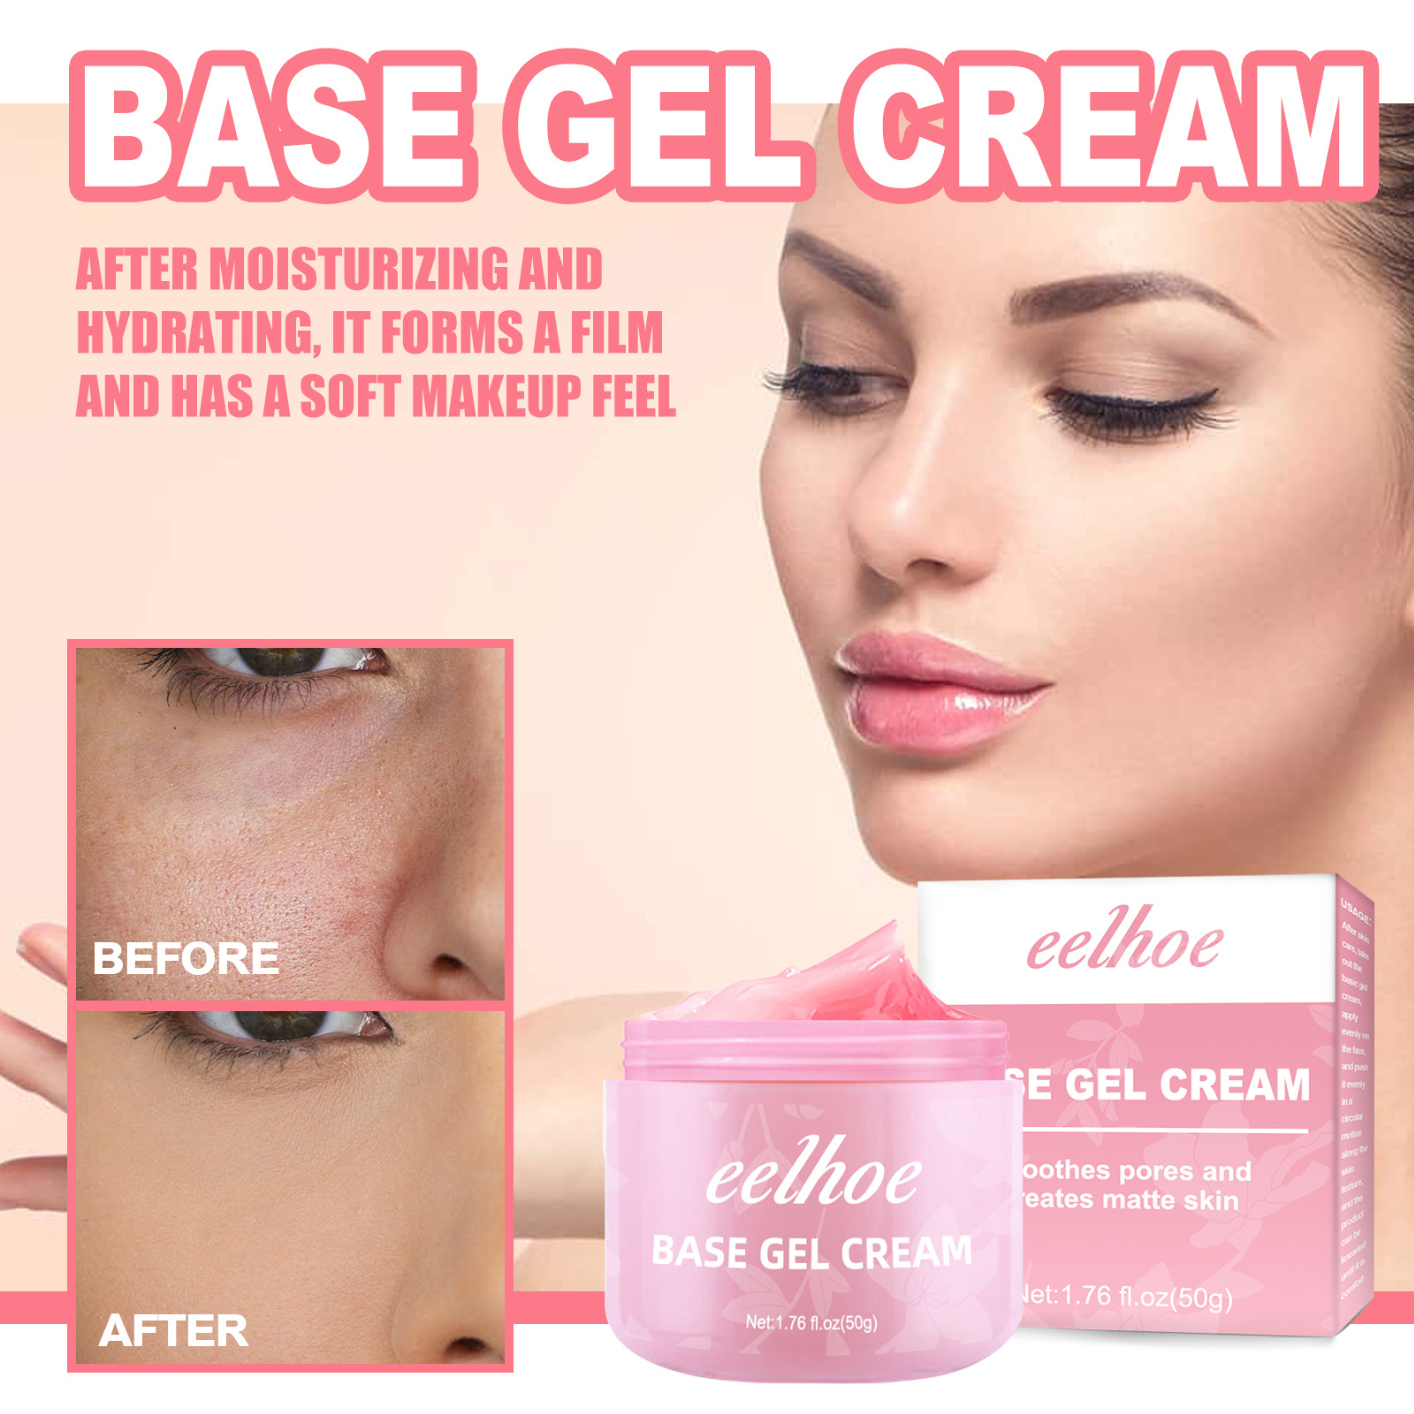 Face Primer Pore Base Gel Cream, Isolation Concealer Cream, Porefessional Face Foundation Primer Makeup for Invisible Pore, Cover Acne, Shrink Pores, Anti-Oxidation, Anti-Aging Wrinkles